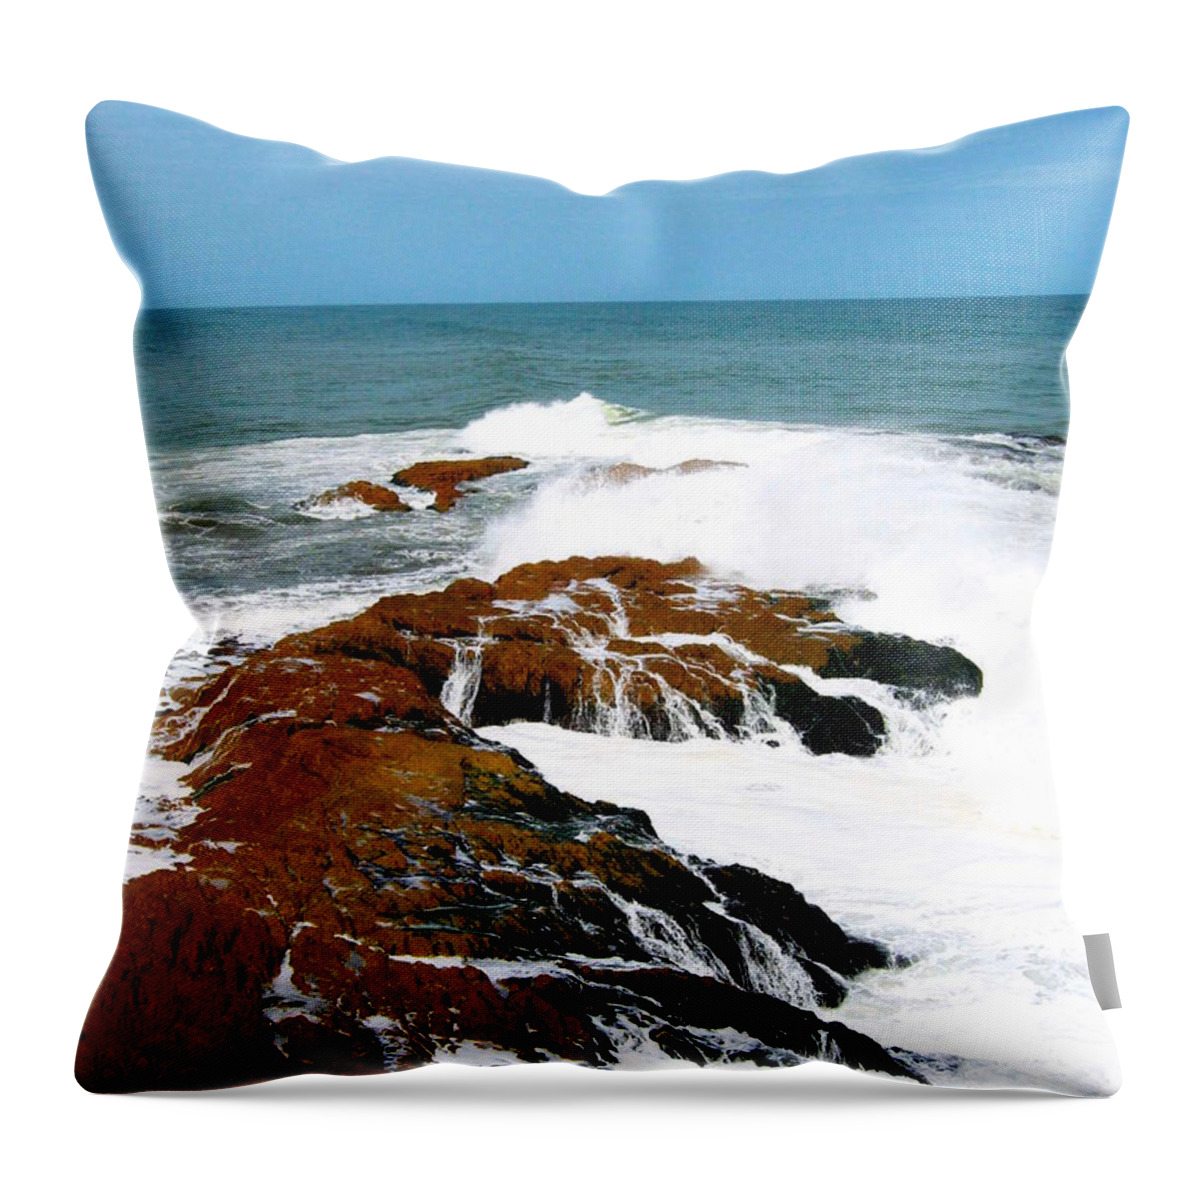 Cape Coast Throw Pillow featuring the photograph Cape Coast Ghana by Samantha Lai